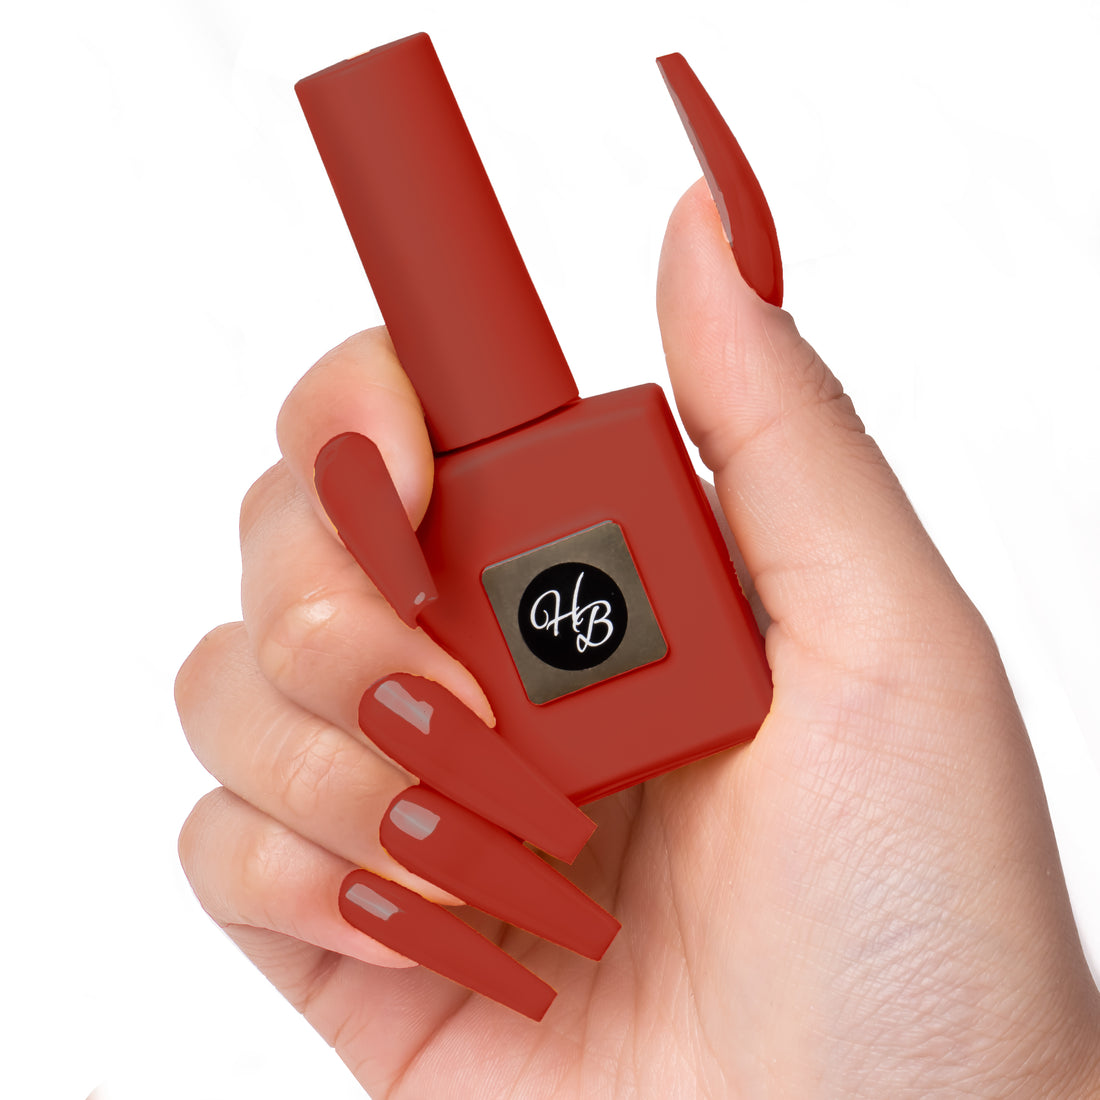 Red-Orange Gel Nail Polish For nails | Quality Nail Polish